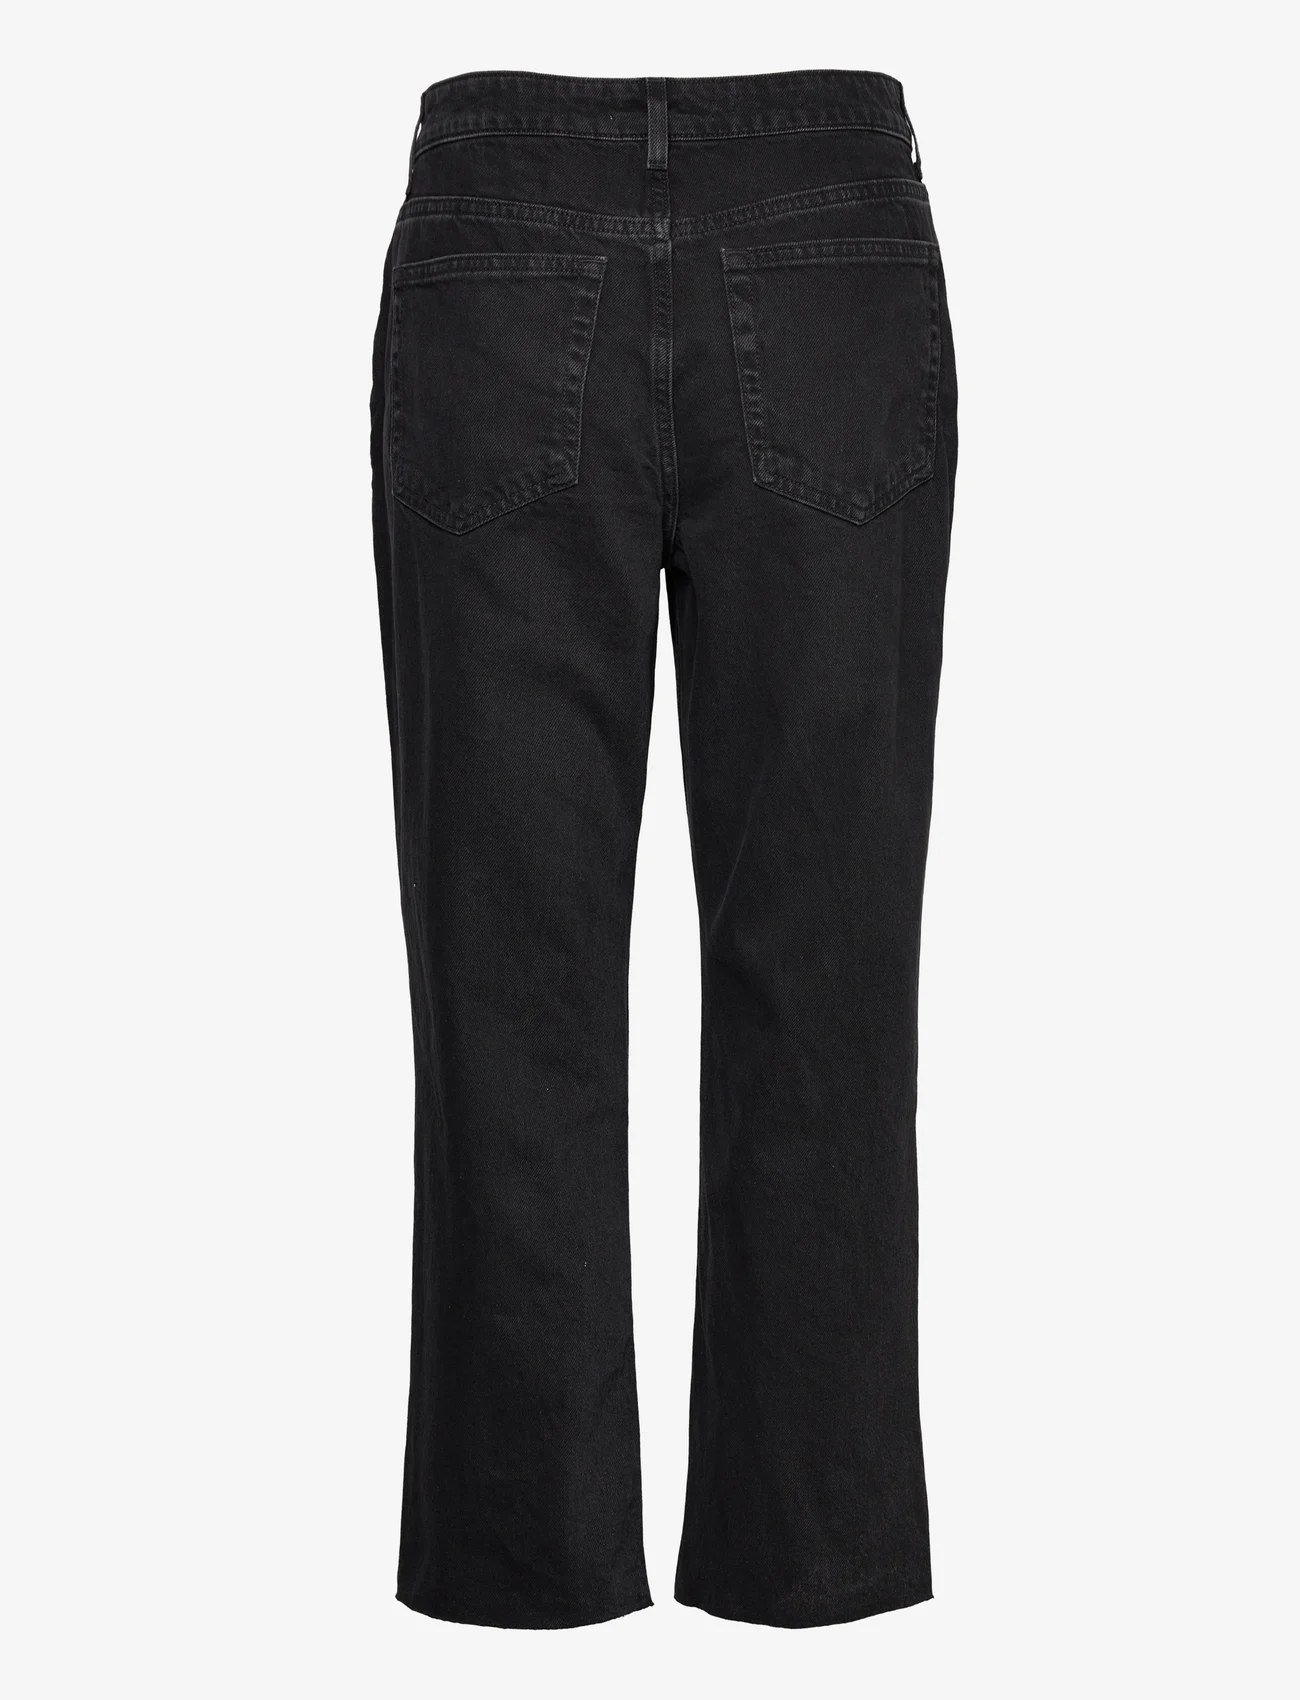 Mango - IRENE - straight jeans - black denim - 1